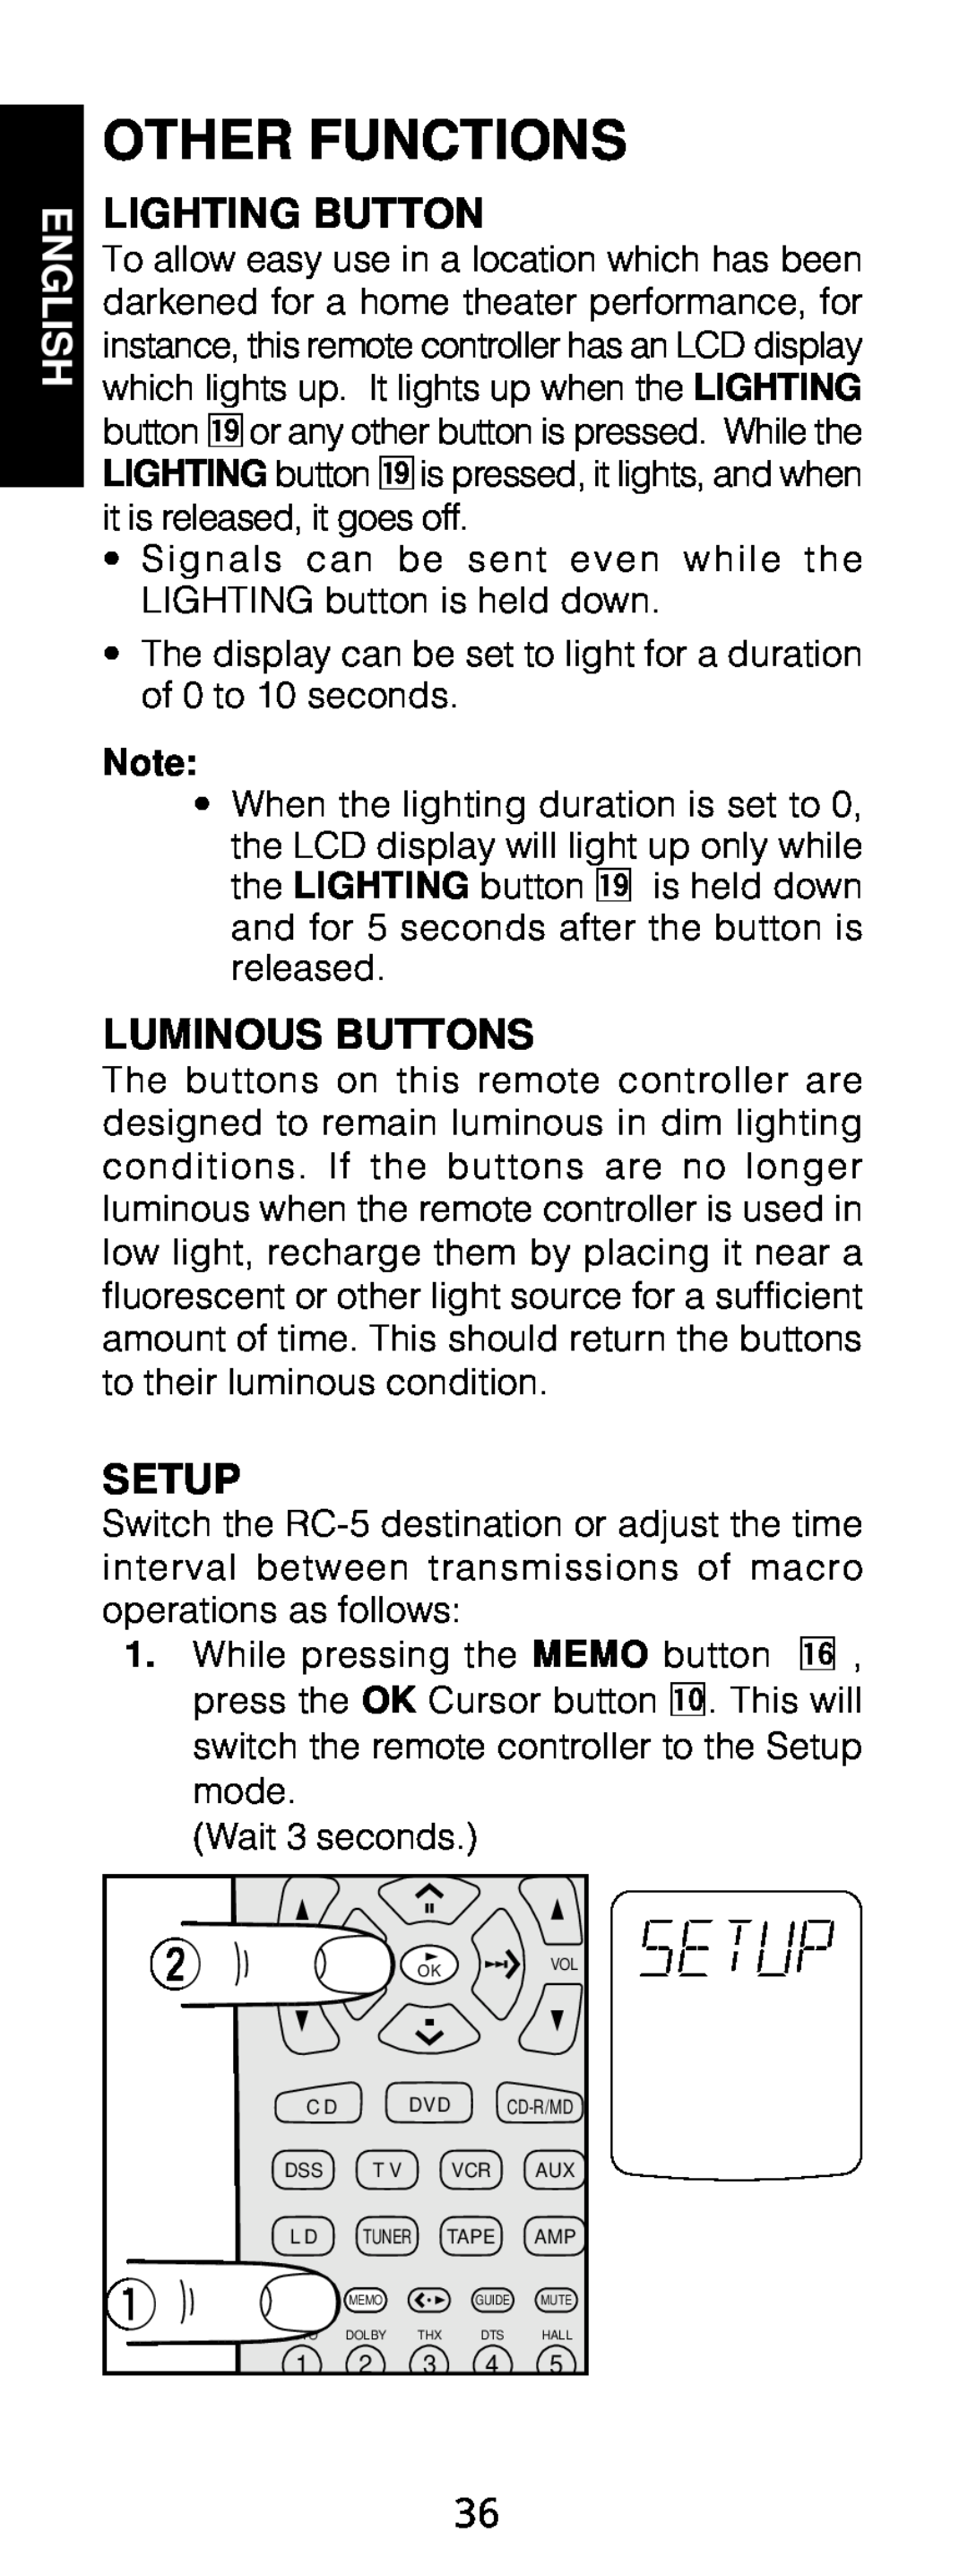 Marantz RC1200 manual Other Functions, Lighting Button, Luminous Buttons, Setup, English 